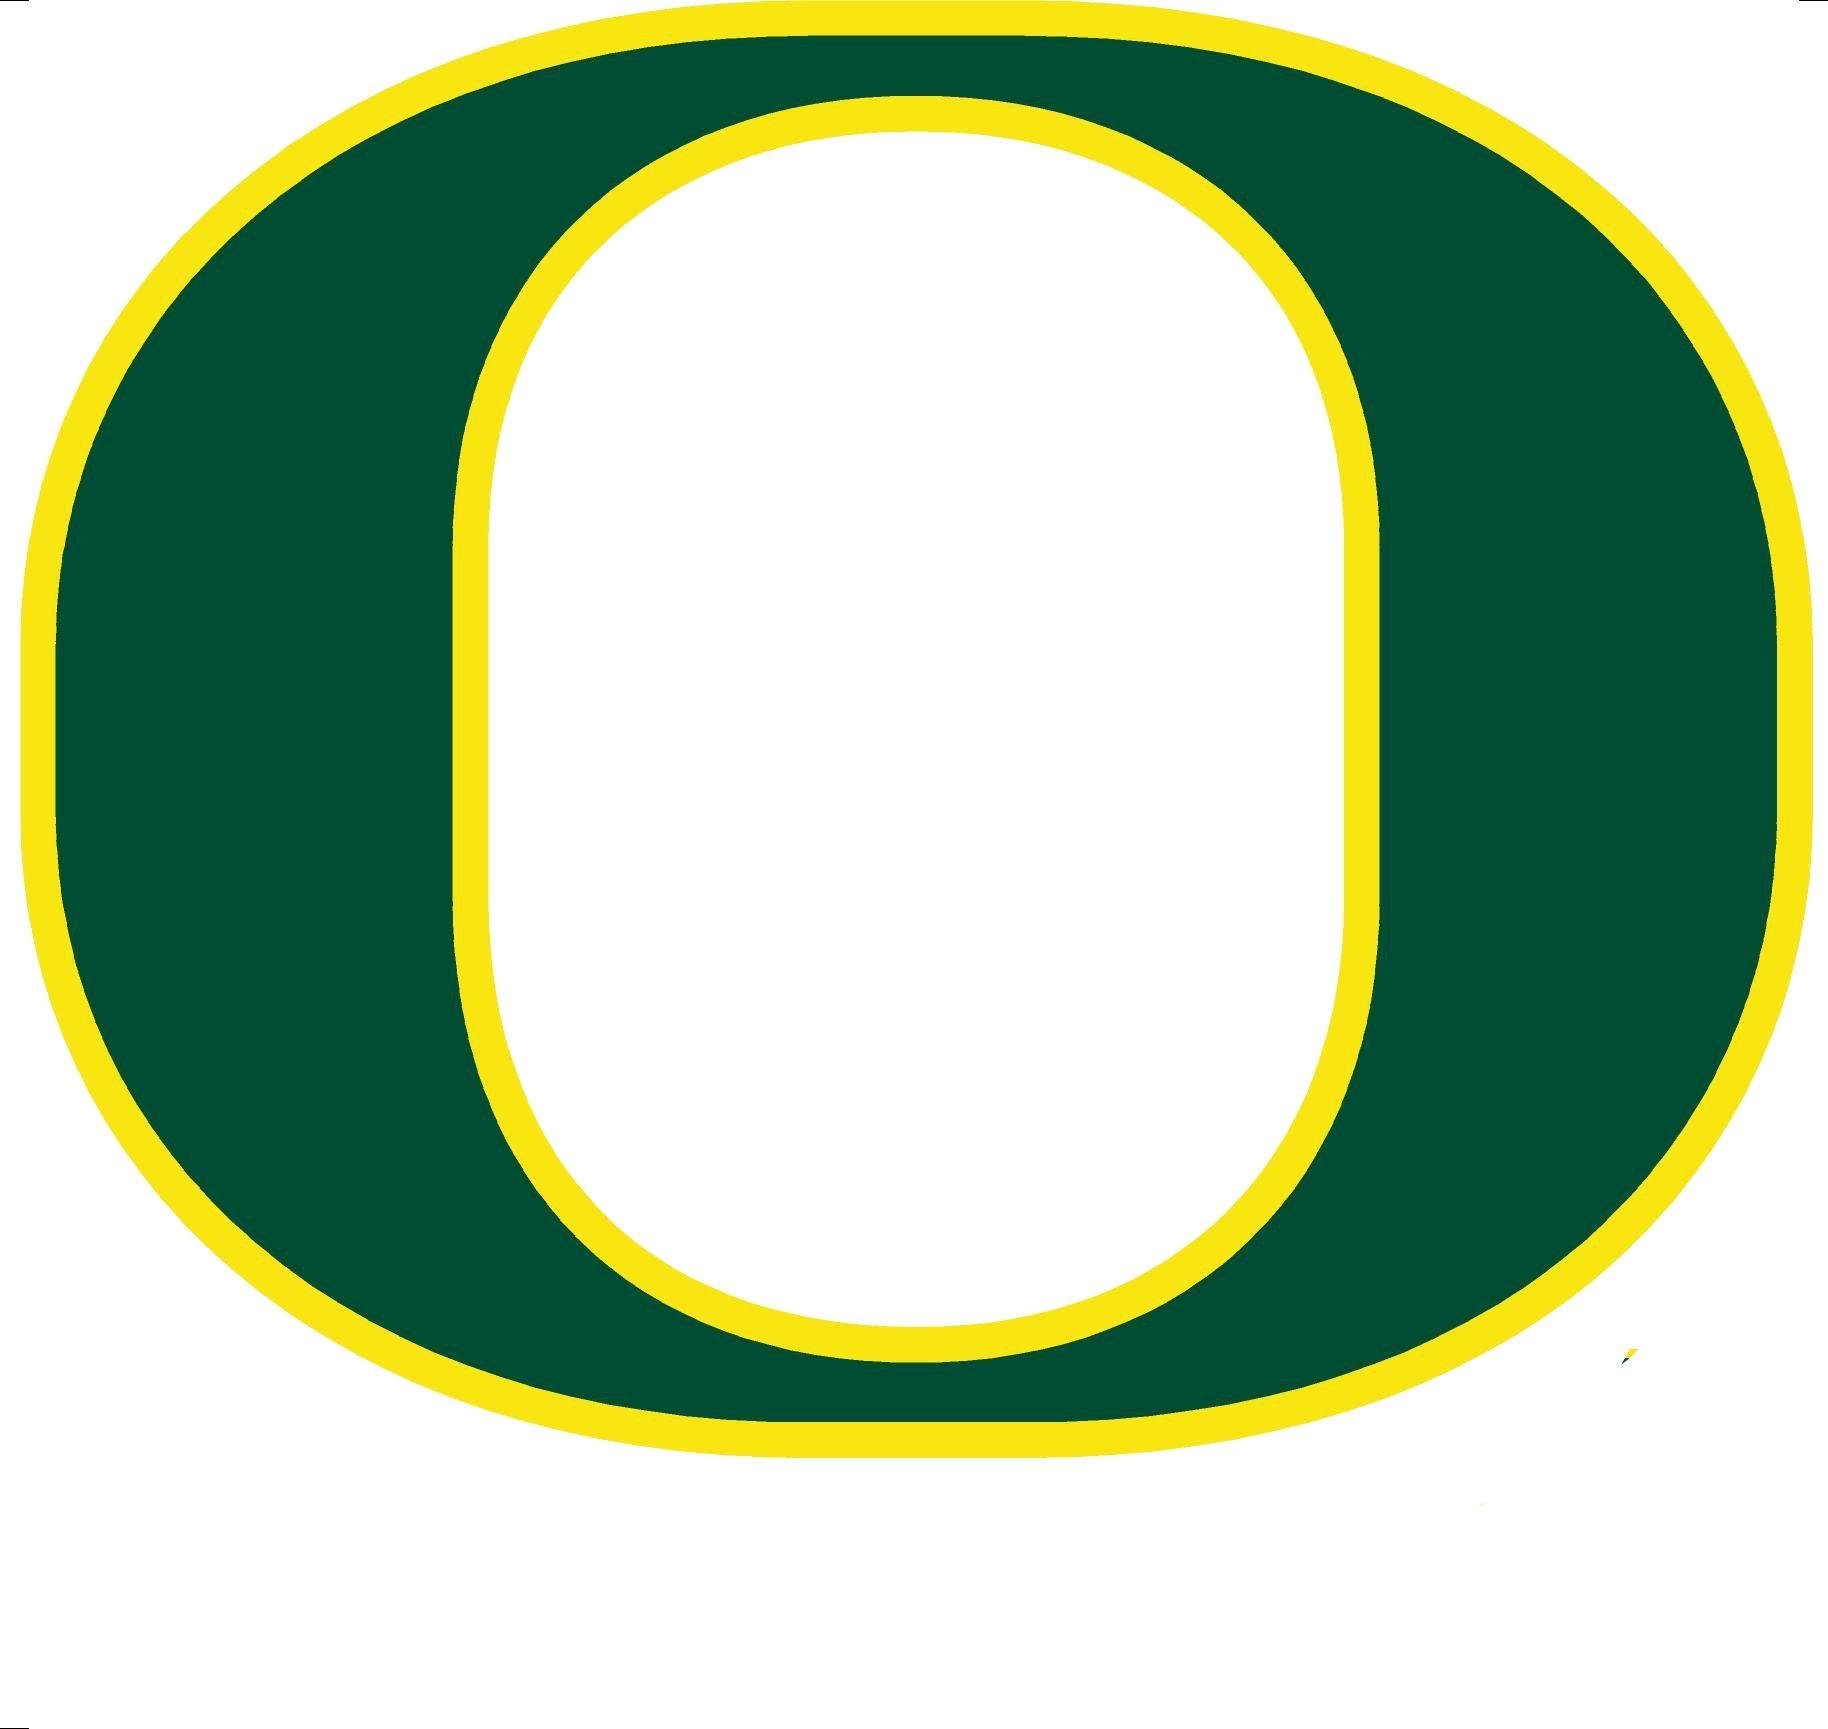 College Football Team Logo - How well do you know College Football Team logos?